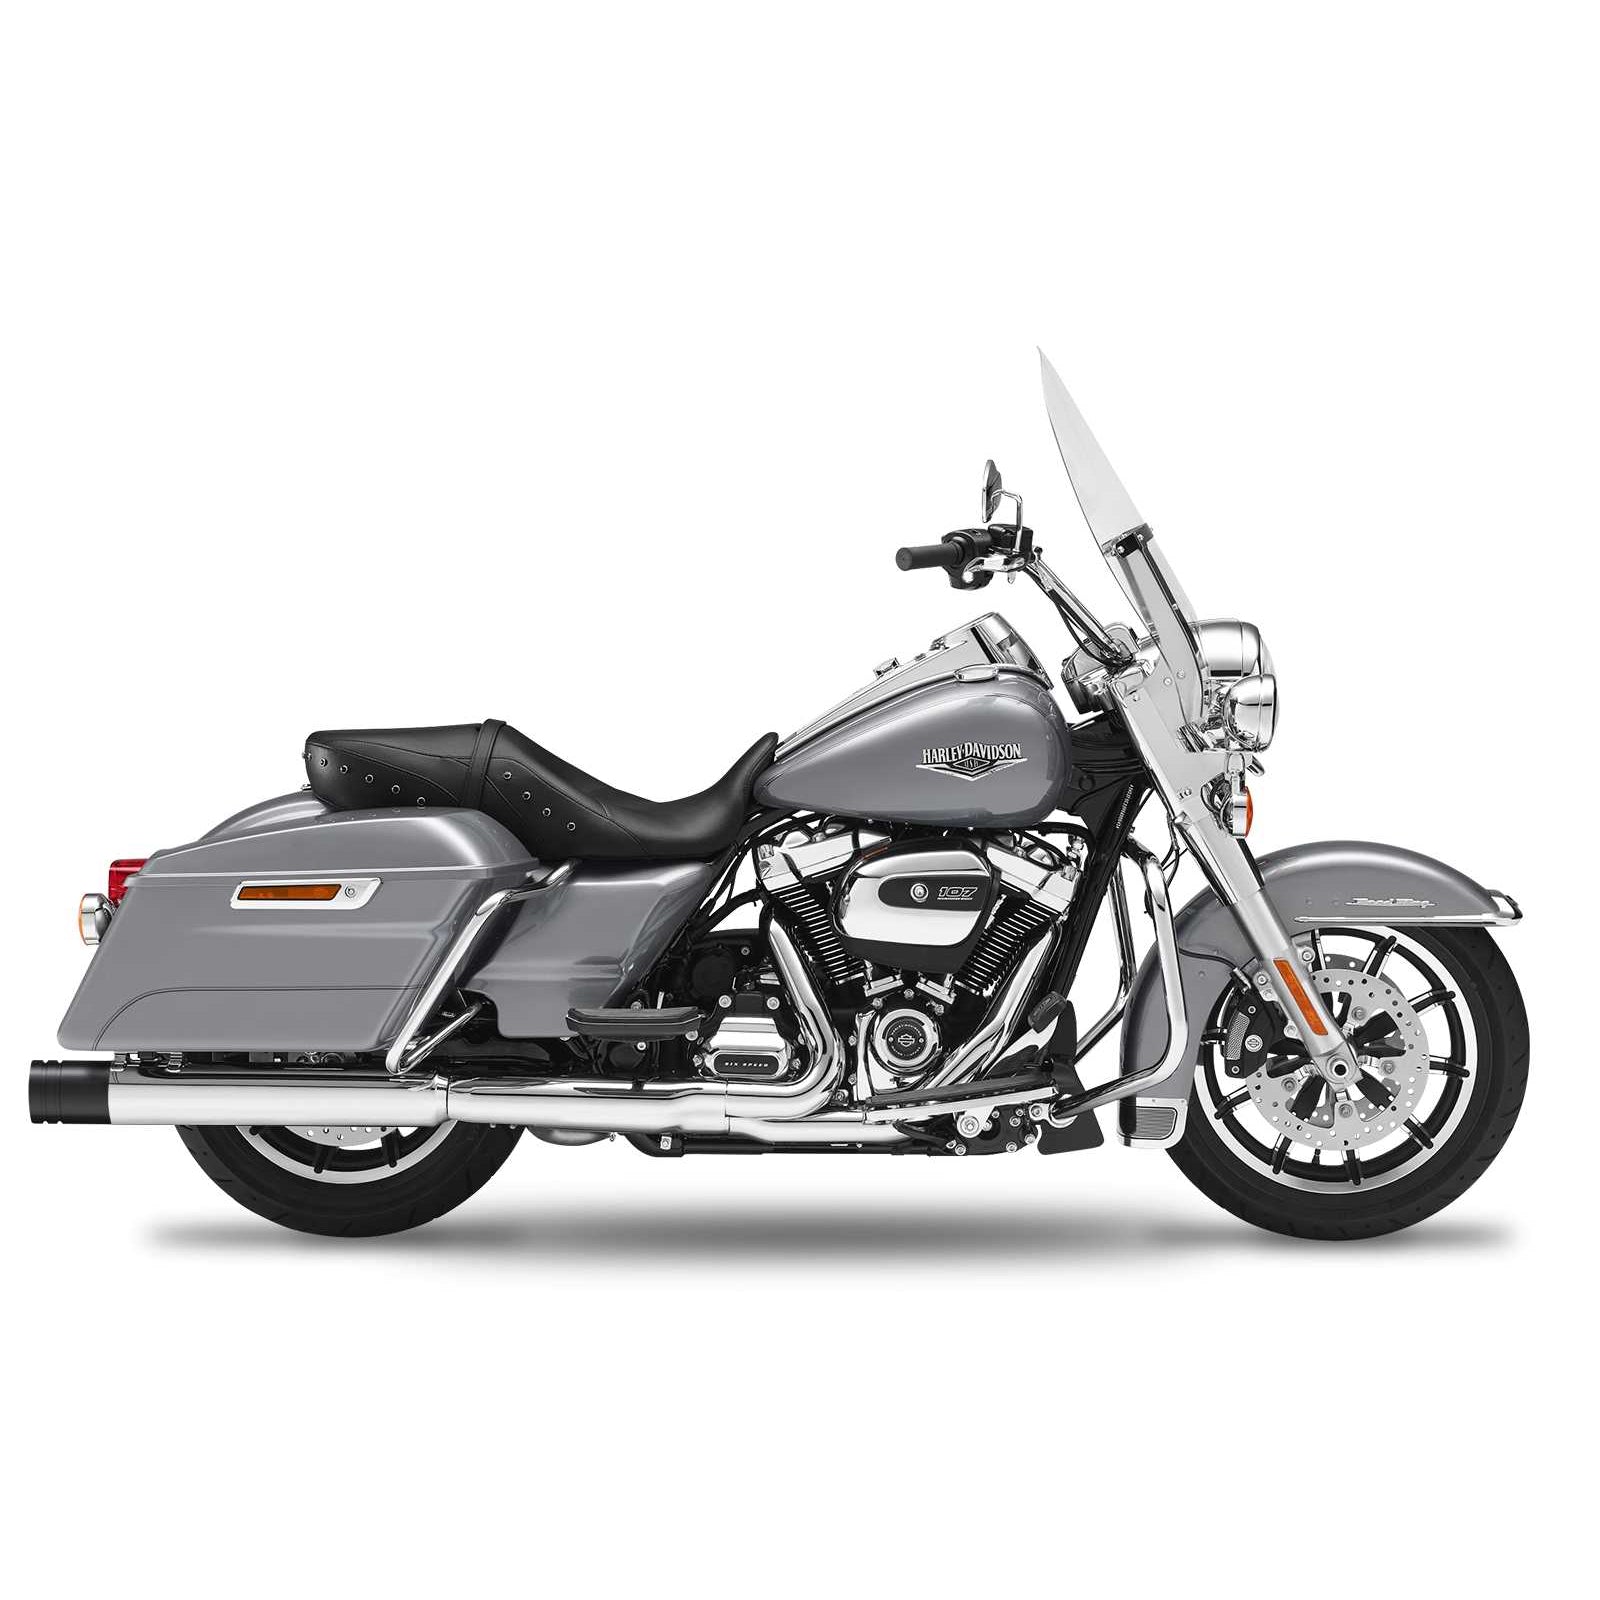 Кesstech 2017 Harley-Davidson Street Glide Special Slipons adjustable